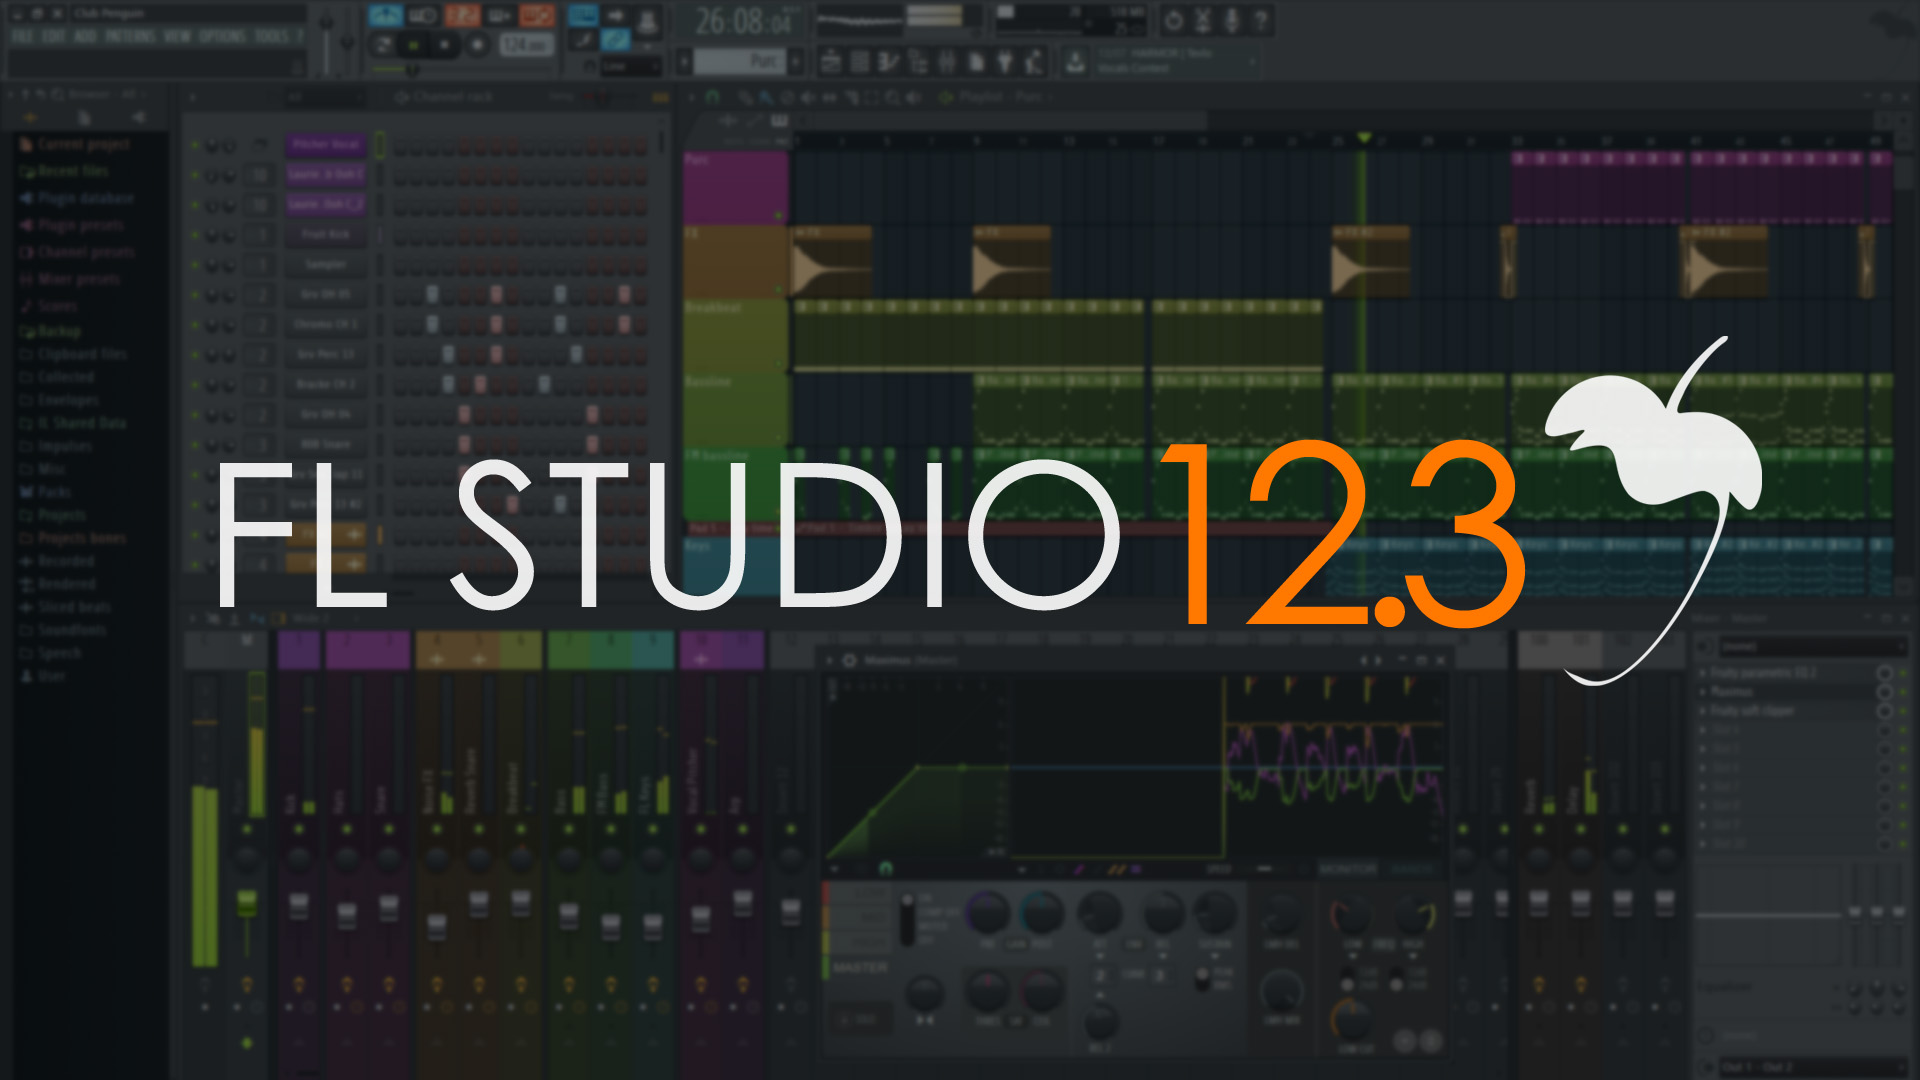 fl studio 12 free download for mac